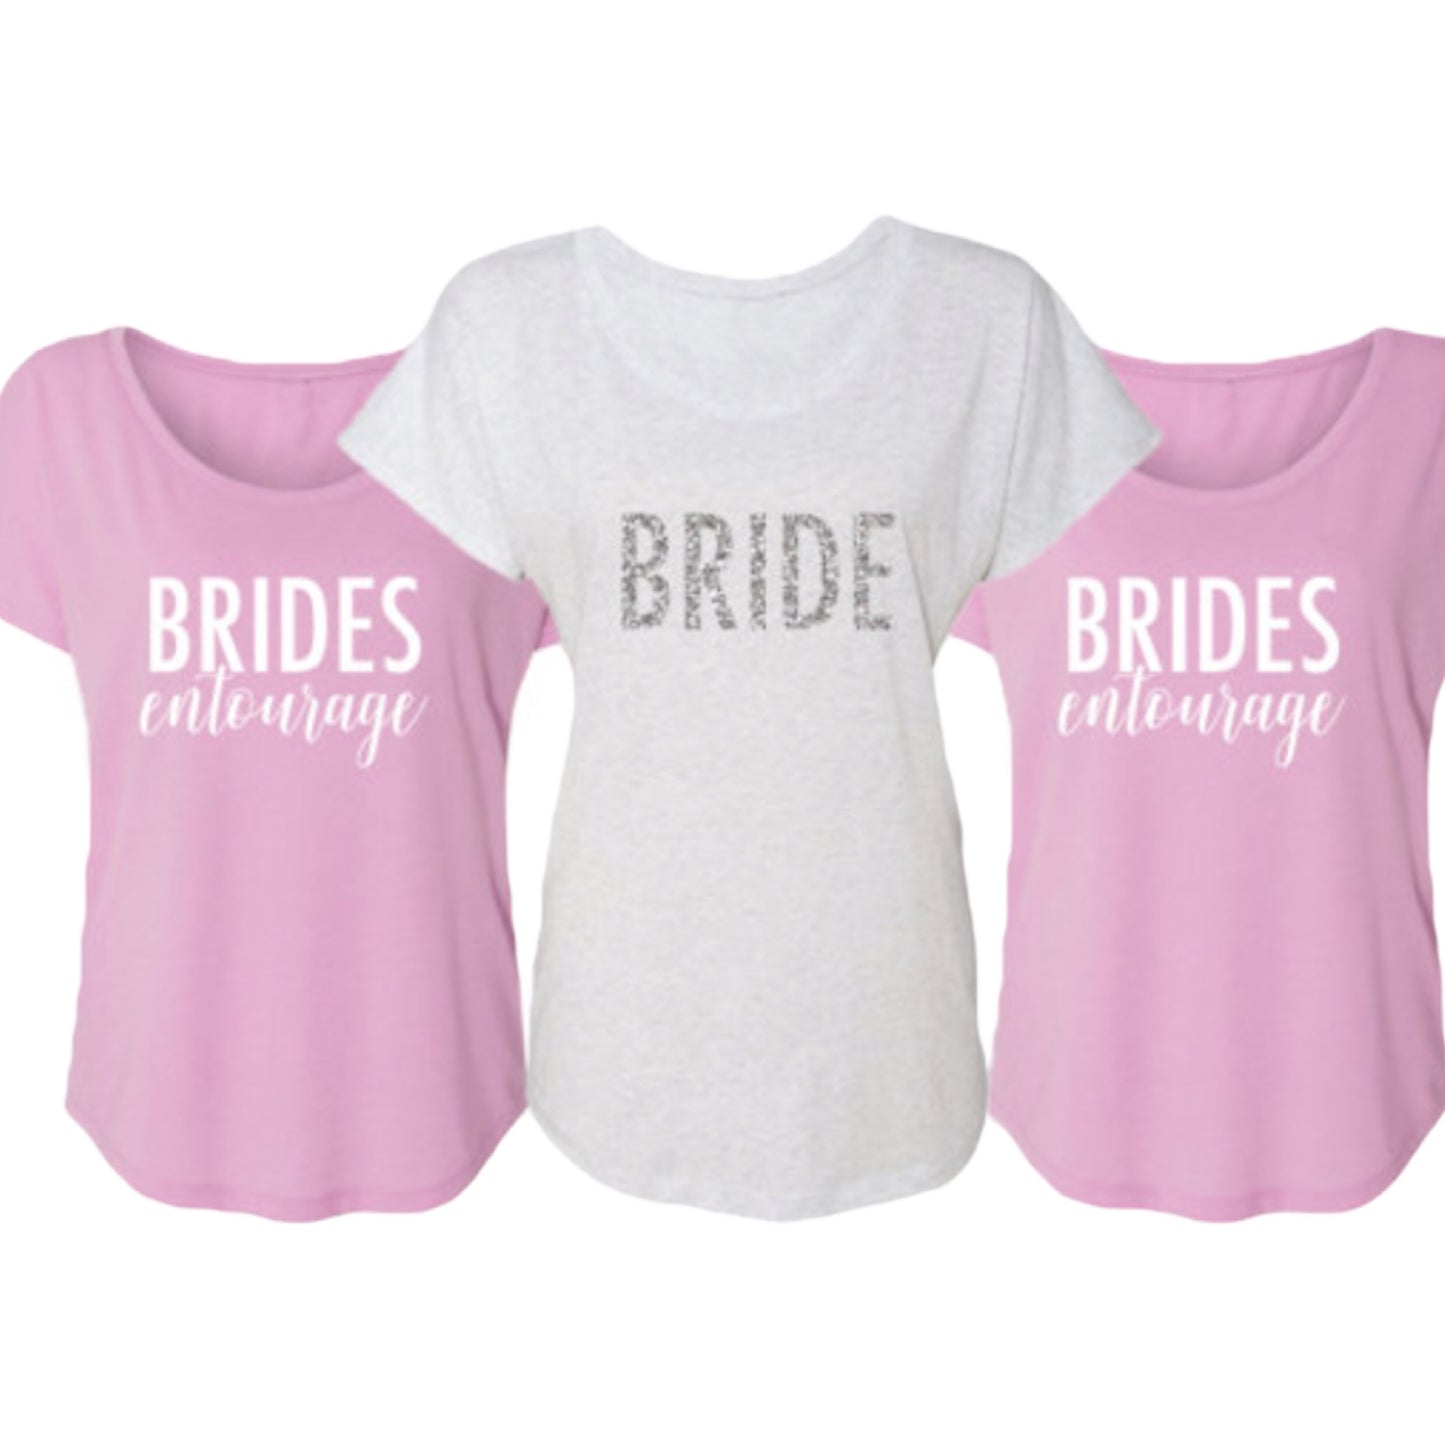 Brides entourage shirt, bride and her entourage shirt, bride and bridesmaid shirt, bachelorette shirt